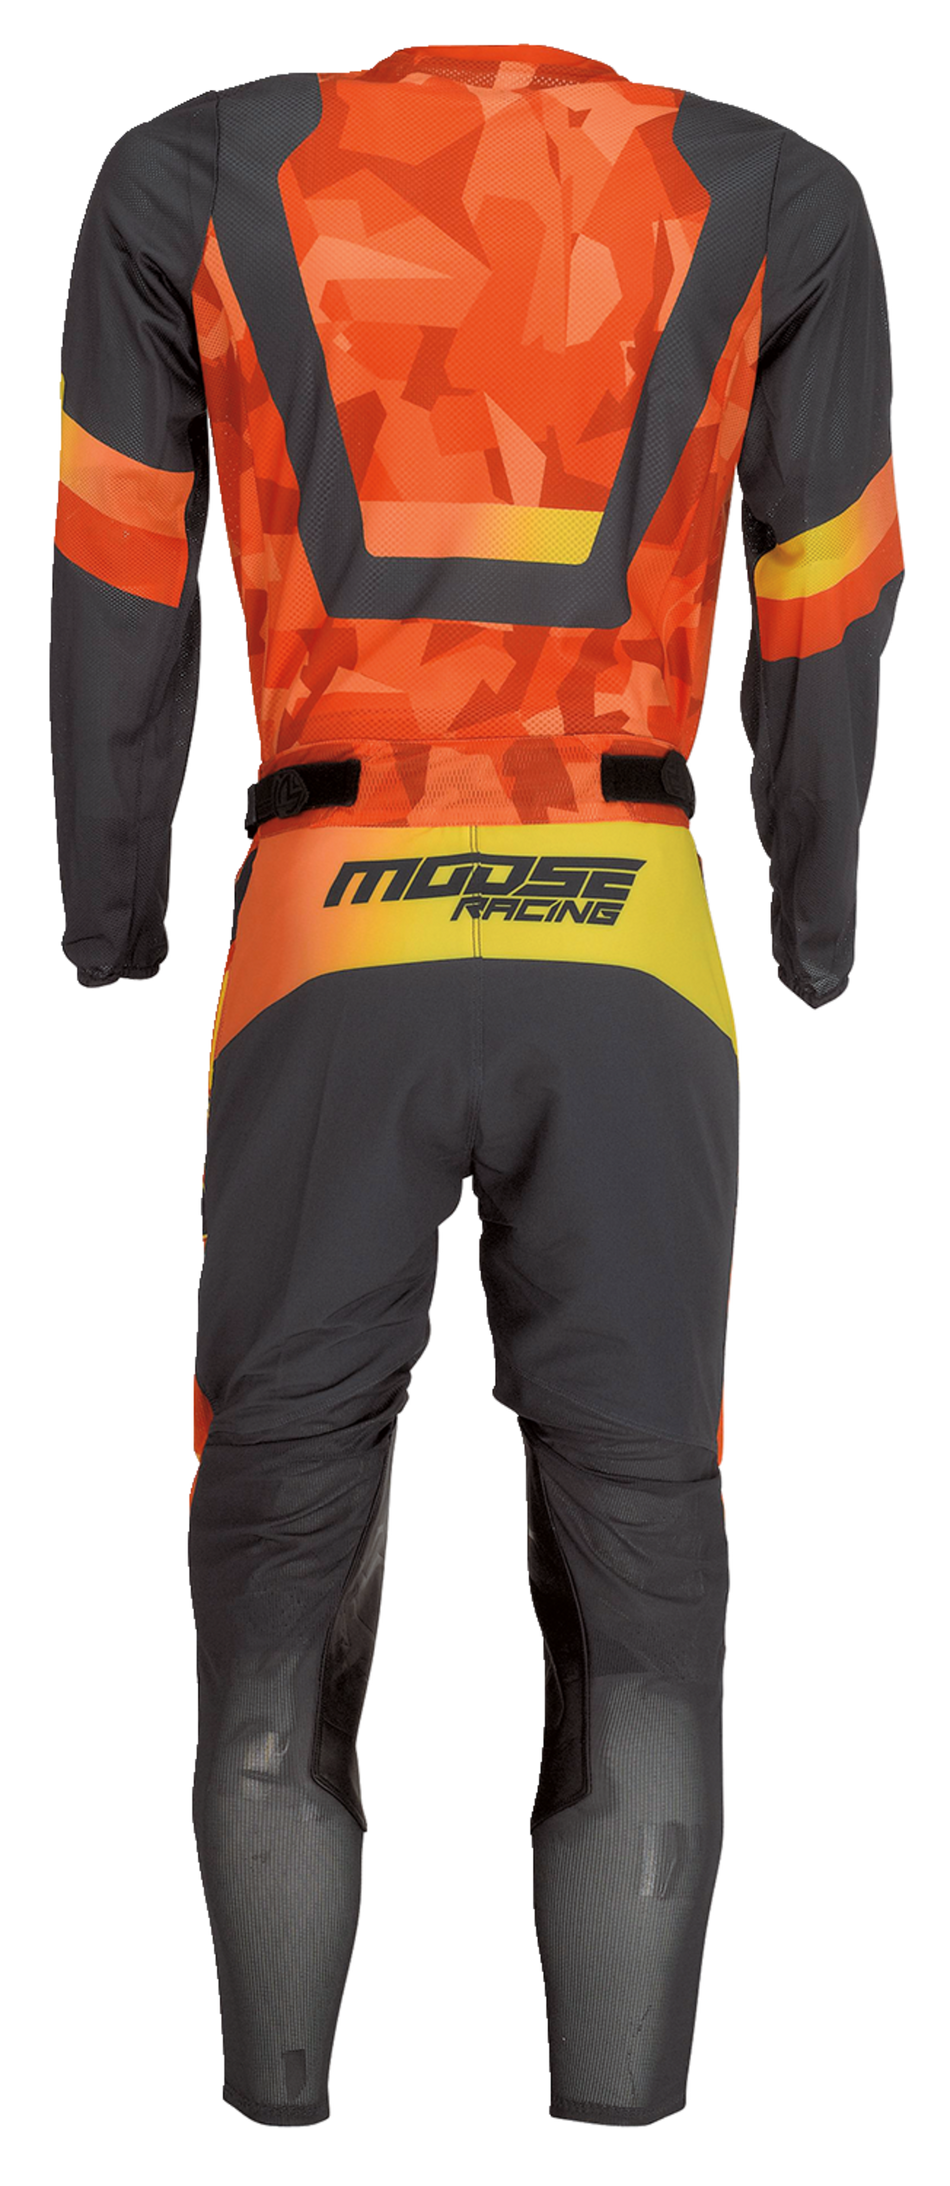 Camiseta MOOSE RACING Sahara™ - Naranja/Negro - Mediana 2910-7223 